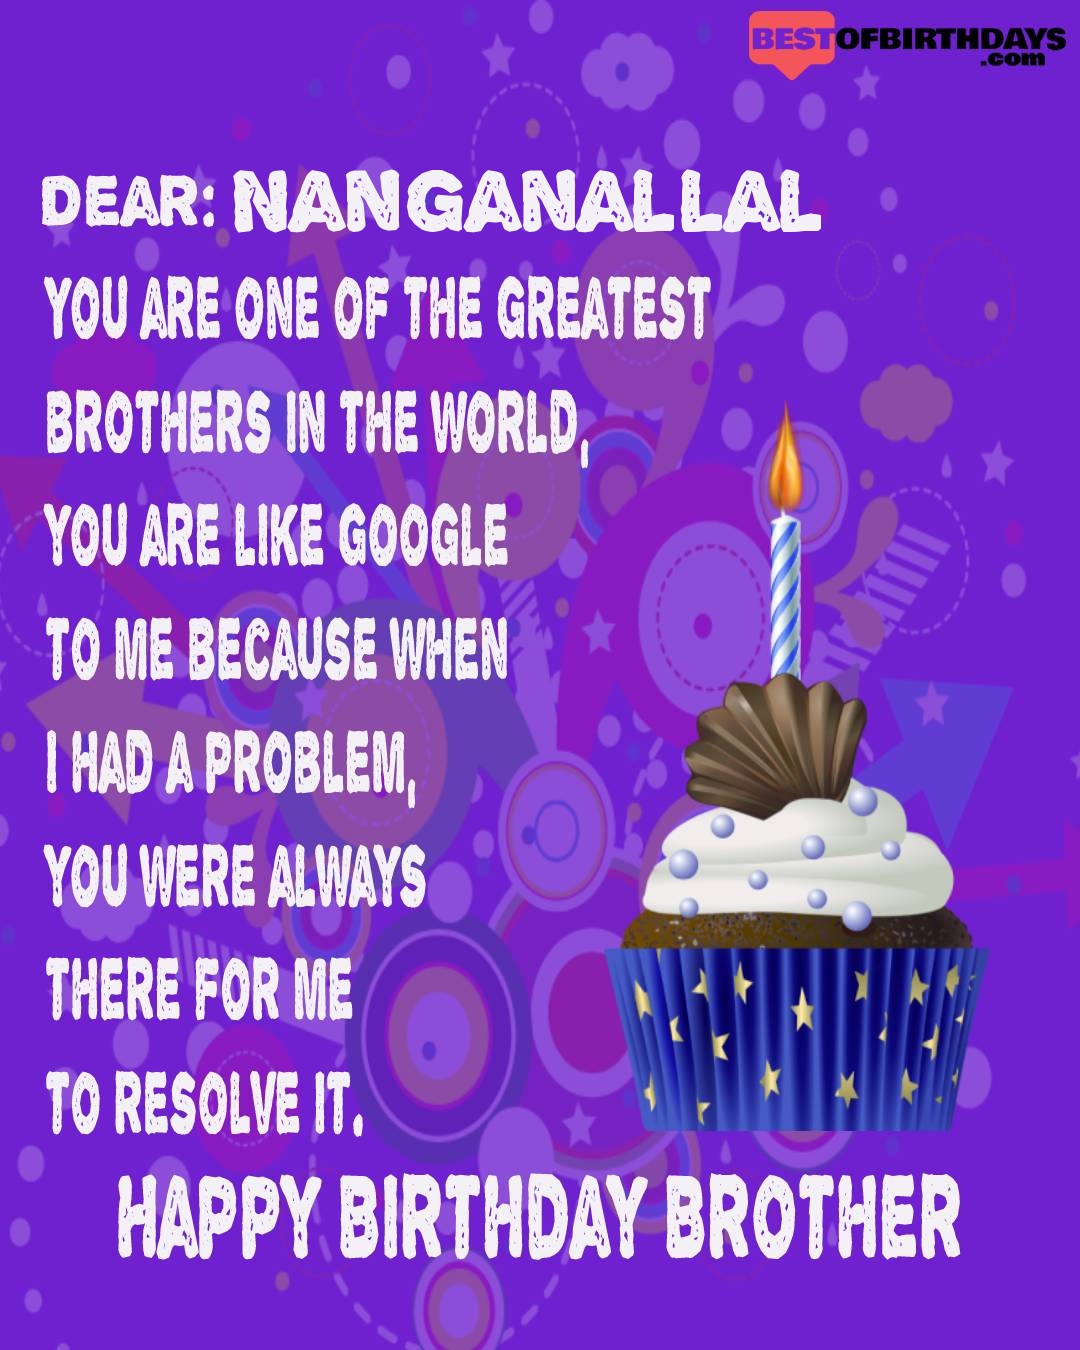 Happy birthday nanganallal bhai brother bro